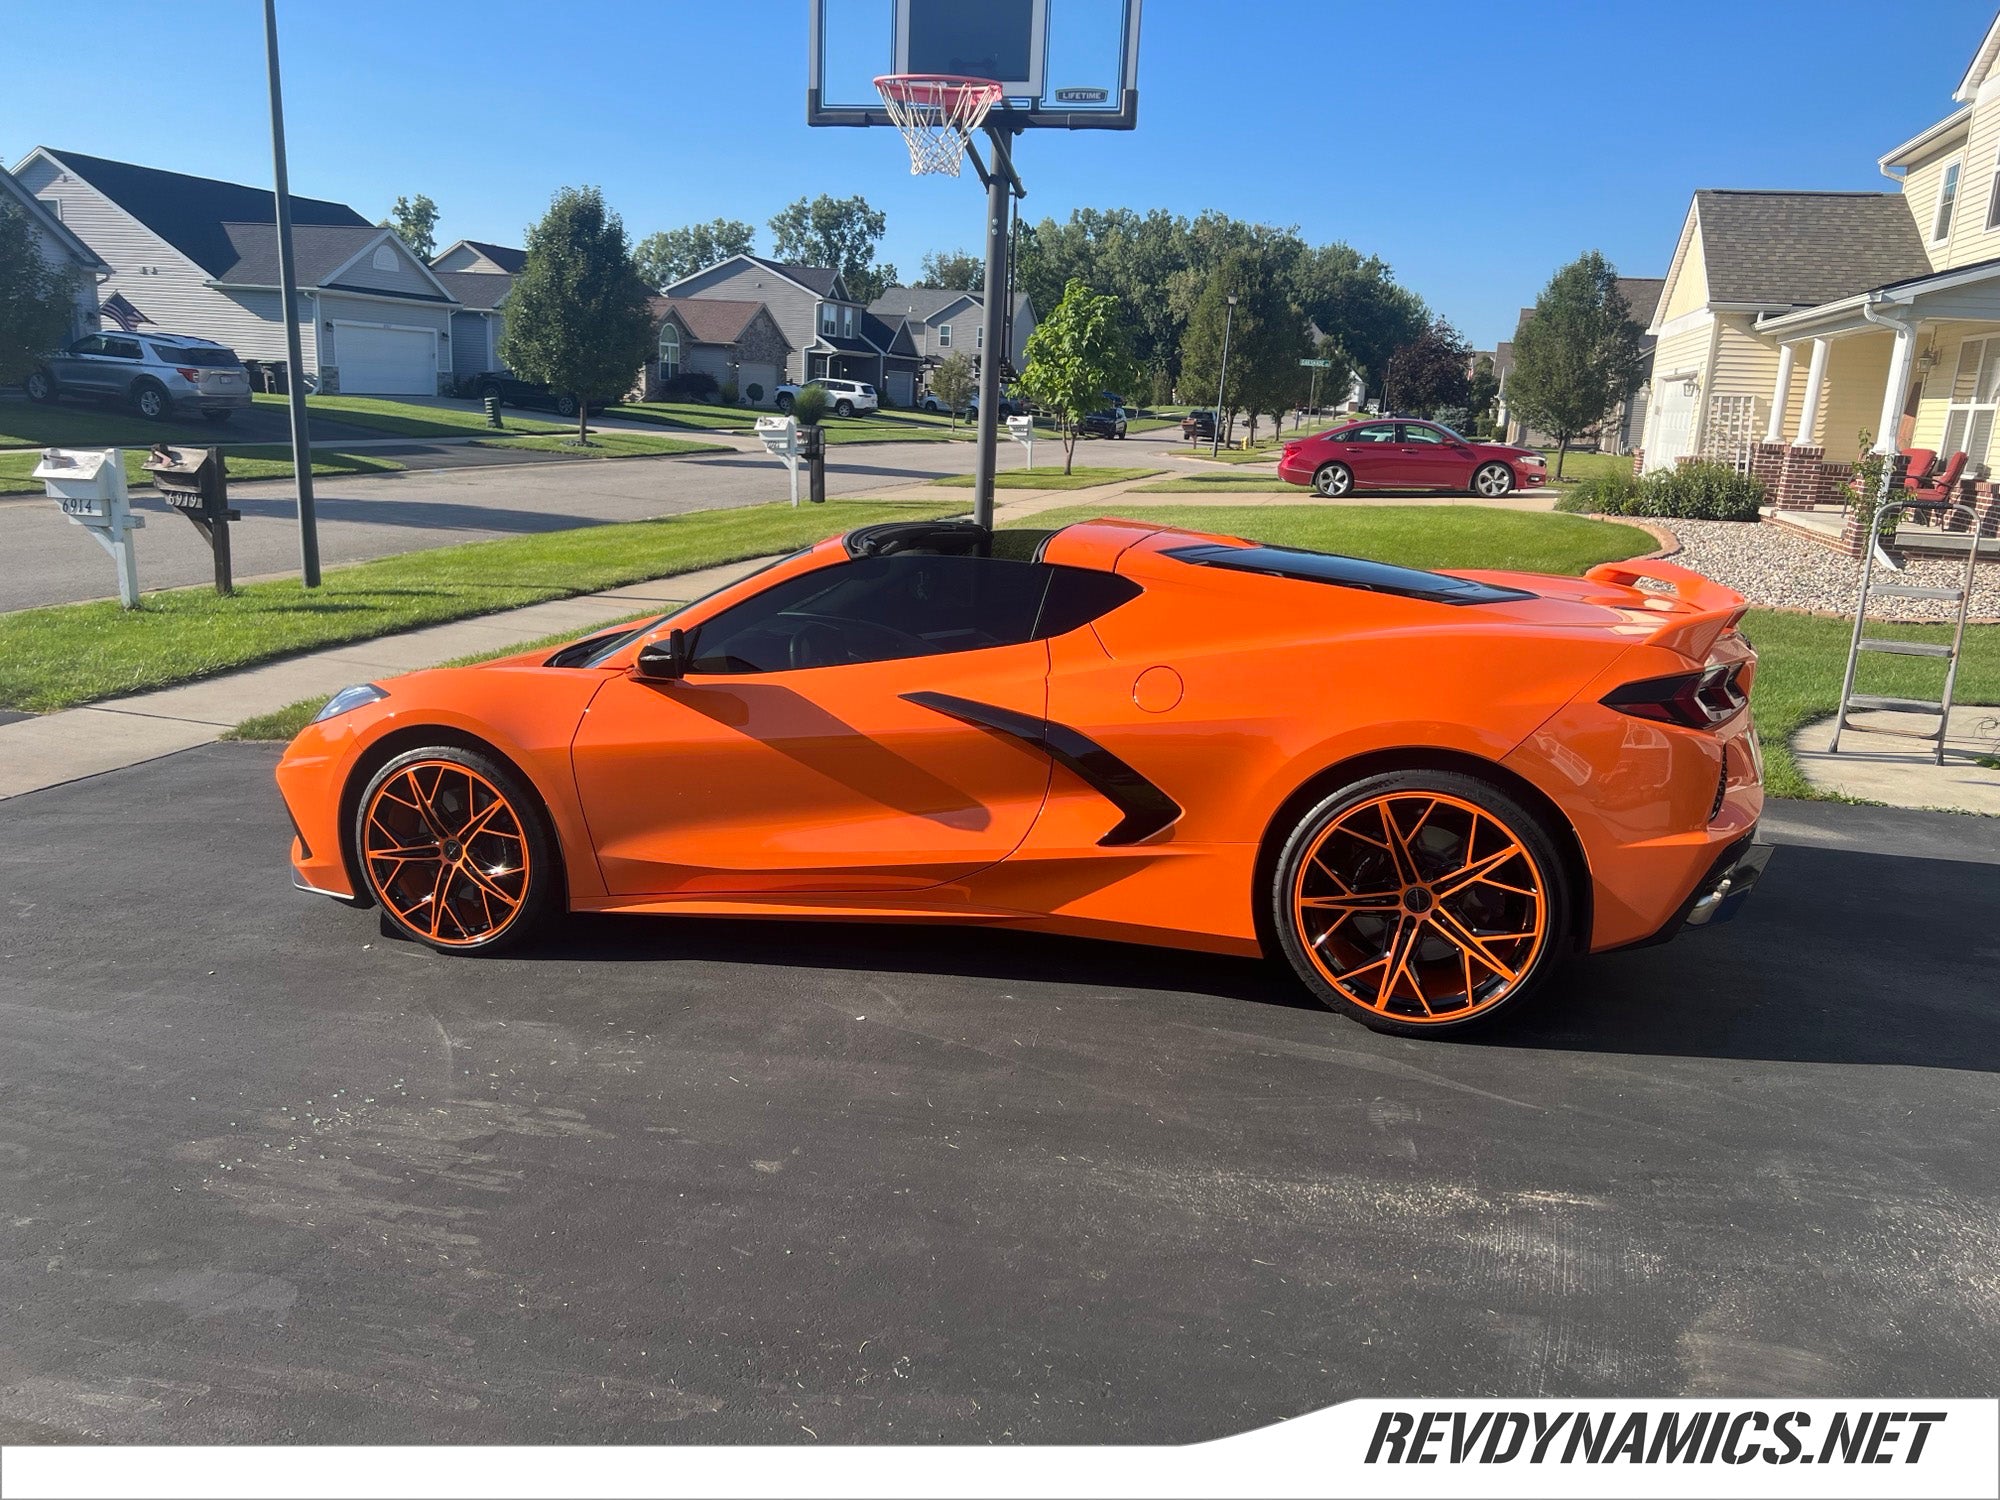 Color matched C8 Corvette wheels amplify orange and carbo black